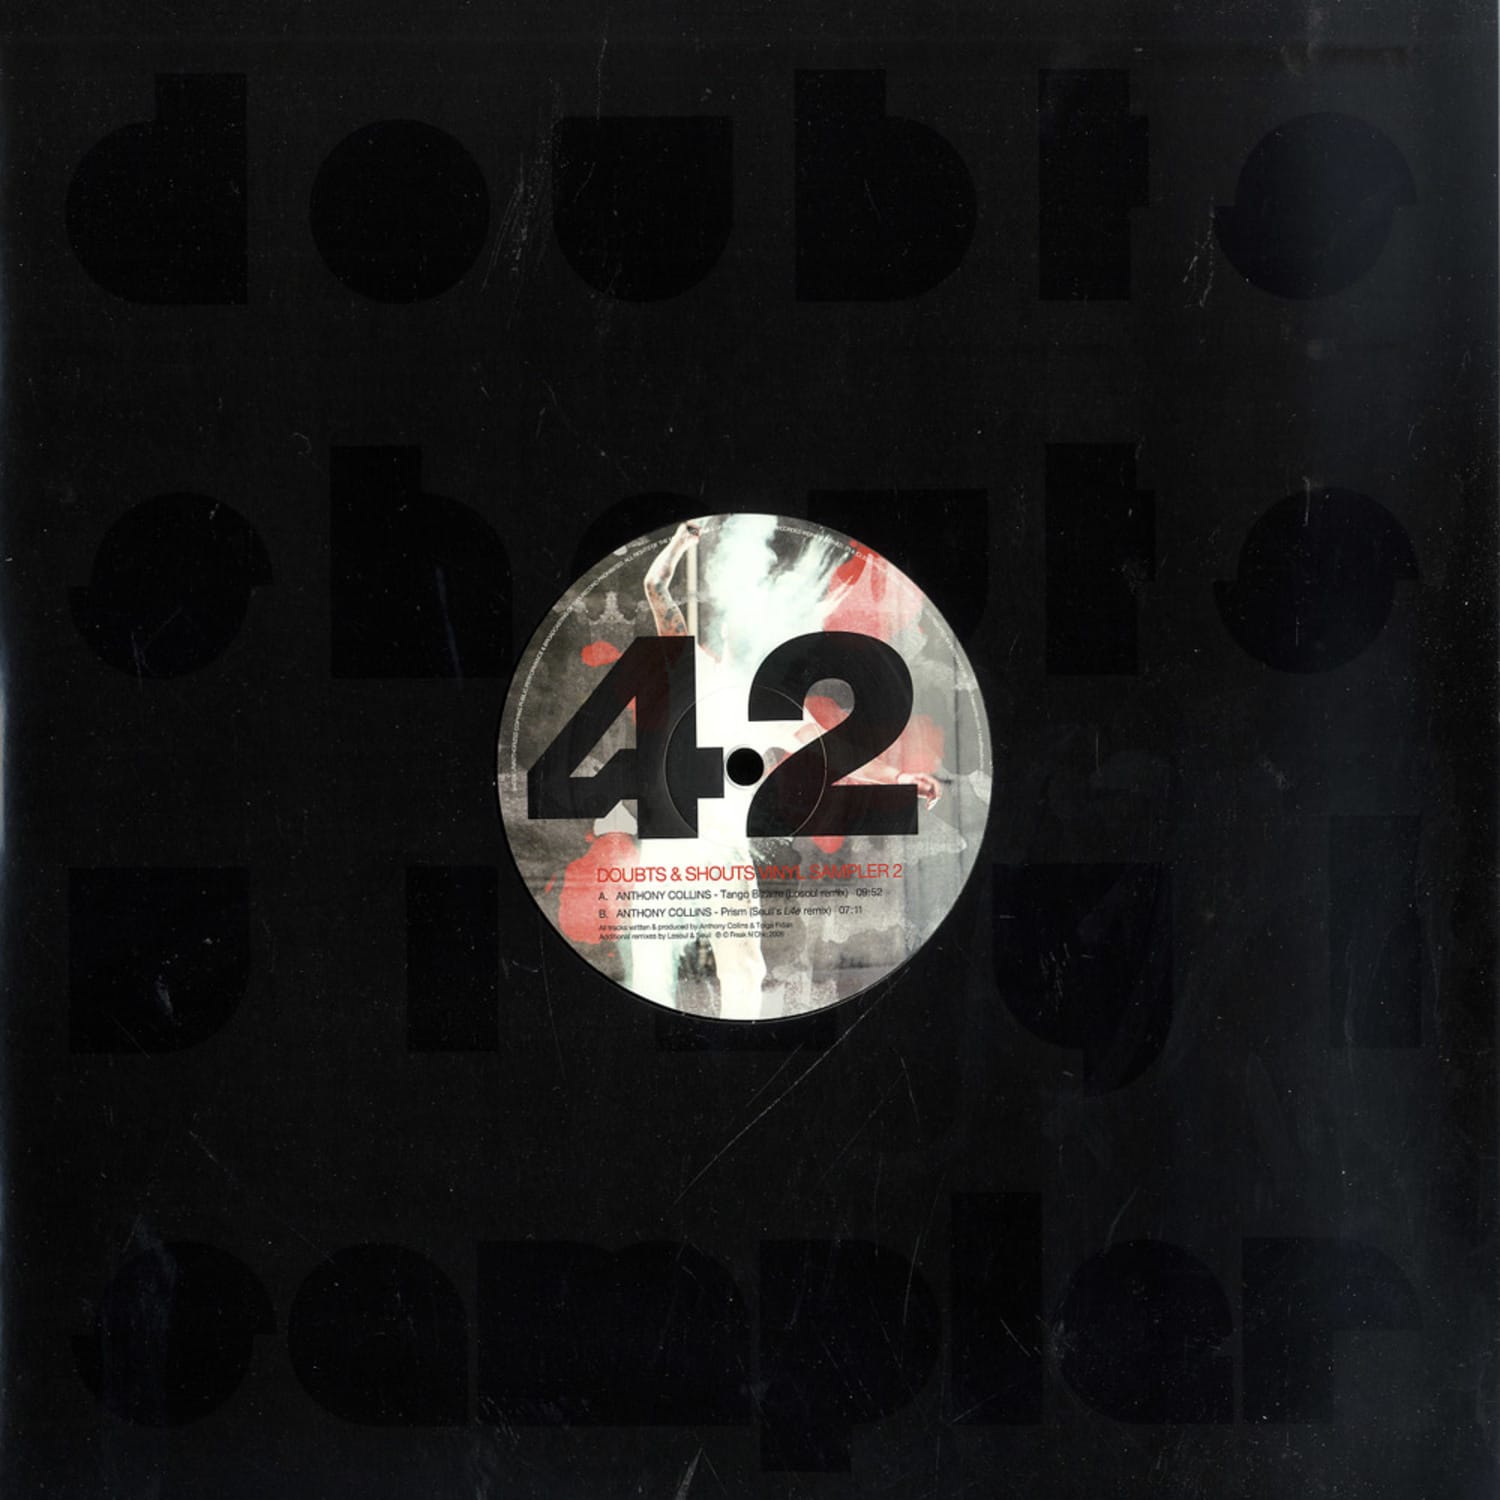 Anthony Collins - DOUBTS & SHOUTS VINYL SAMPLER 02 EP - THE REMIXES